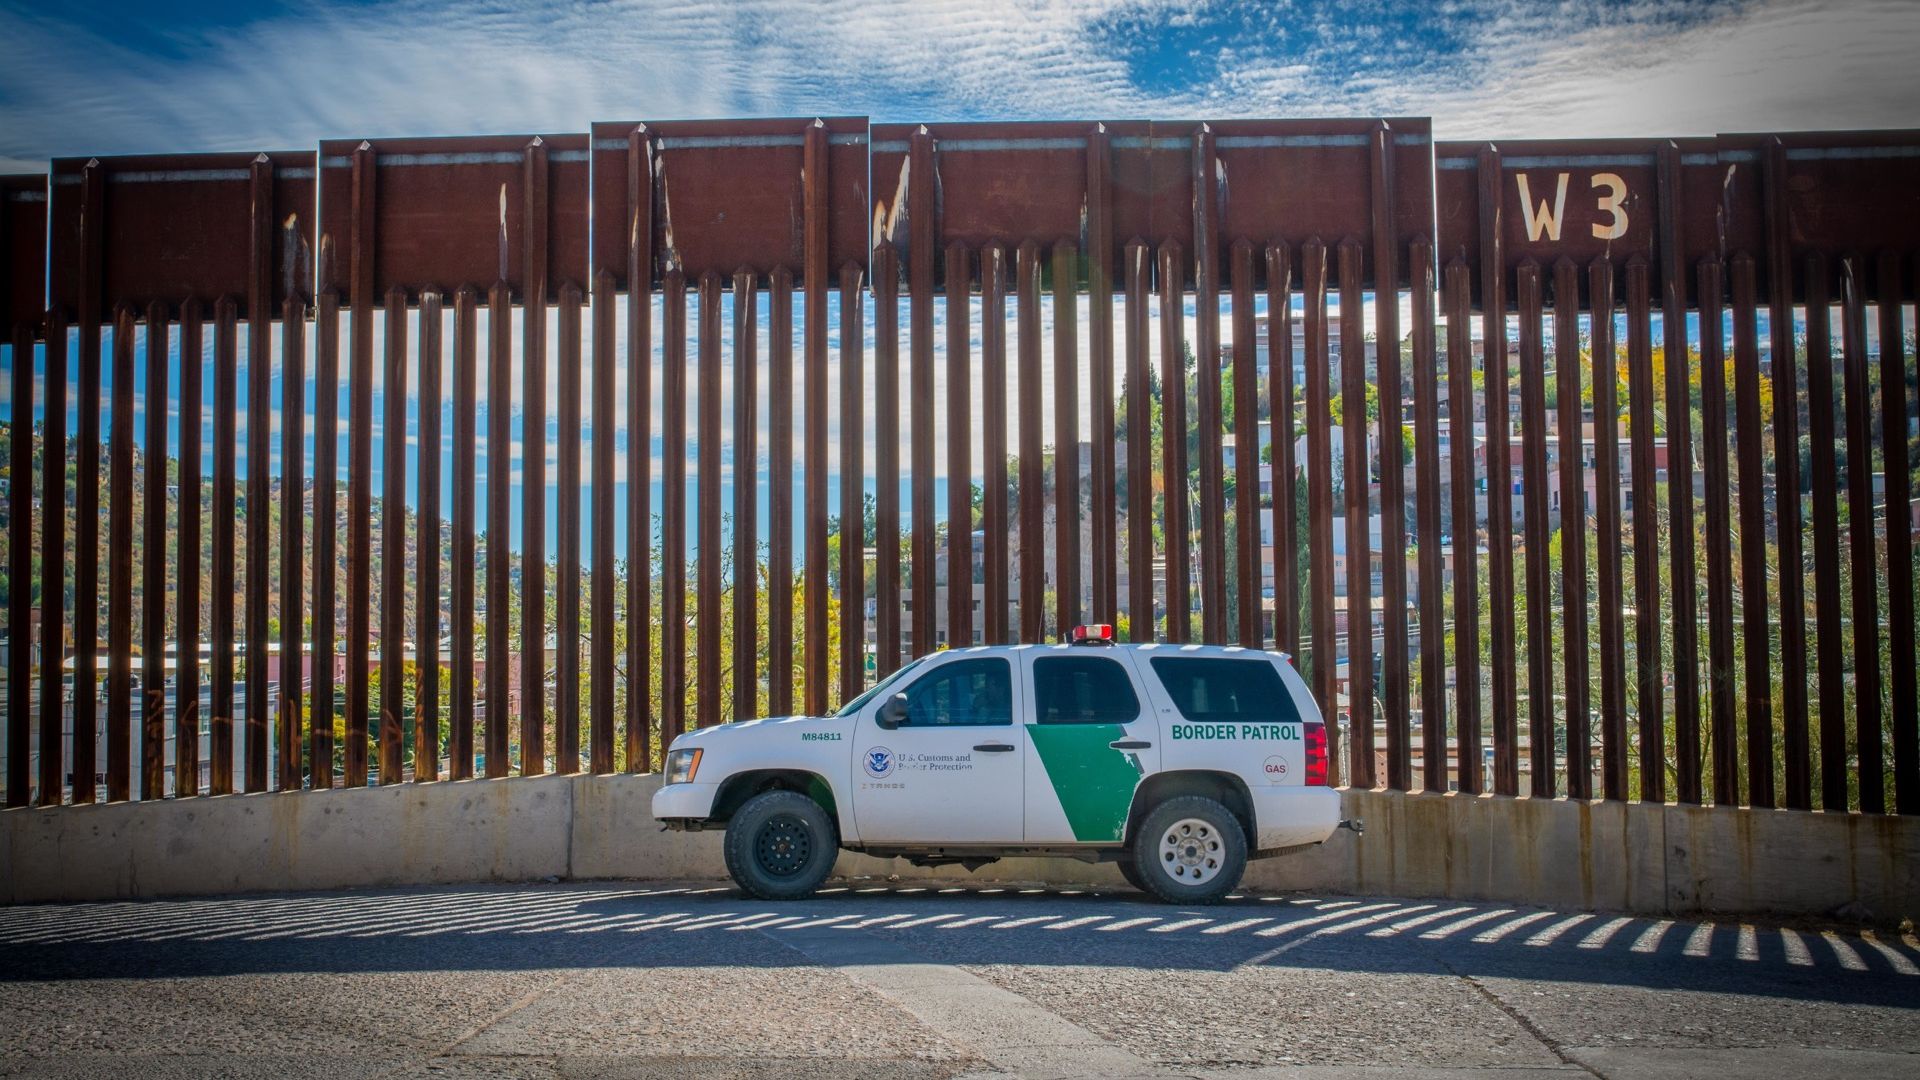 The border wall in Nogales, Arizona